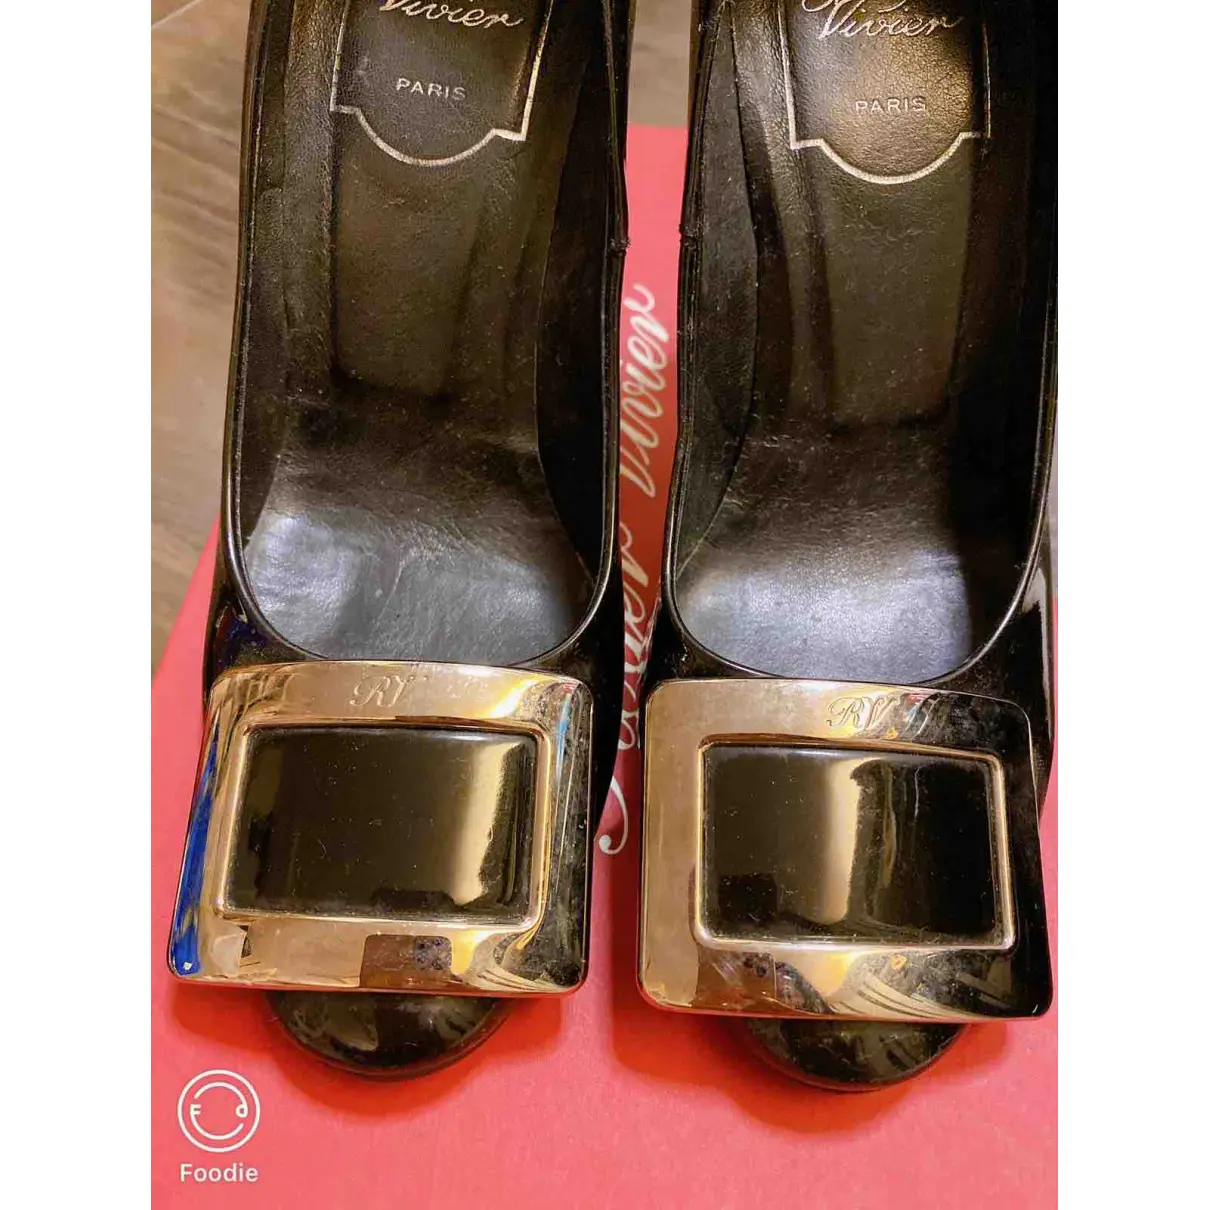 Buy Roger Vivier Trompette leather heels online